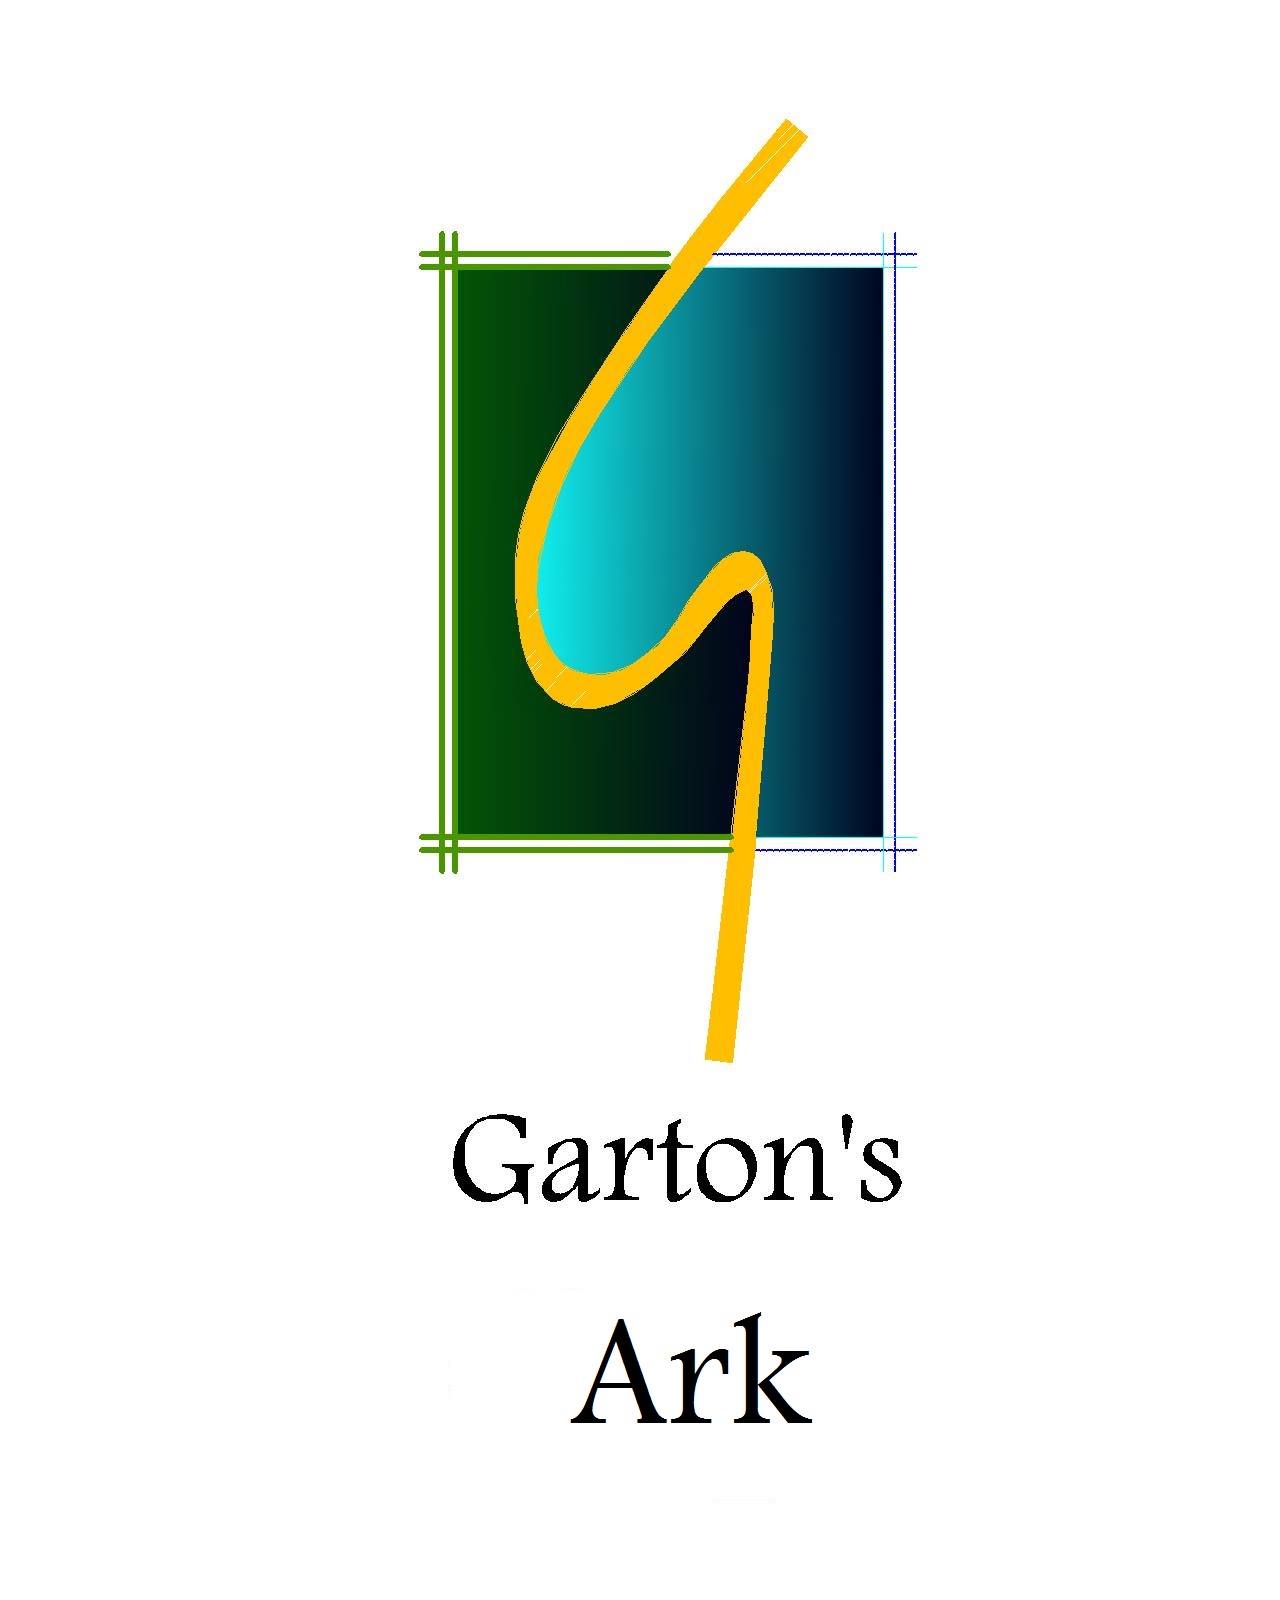 Garton's Ark